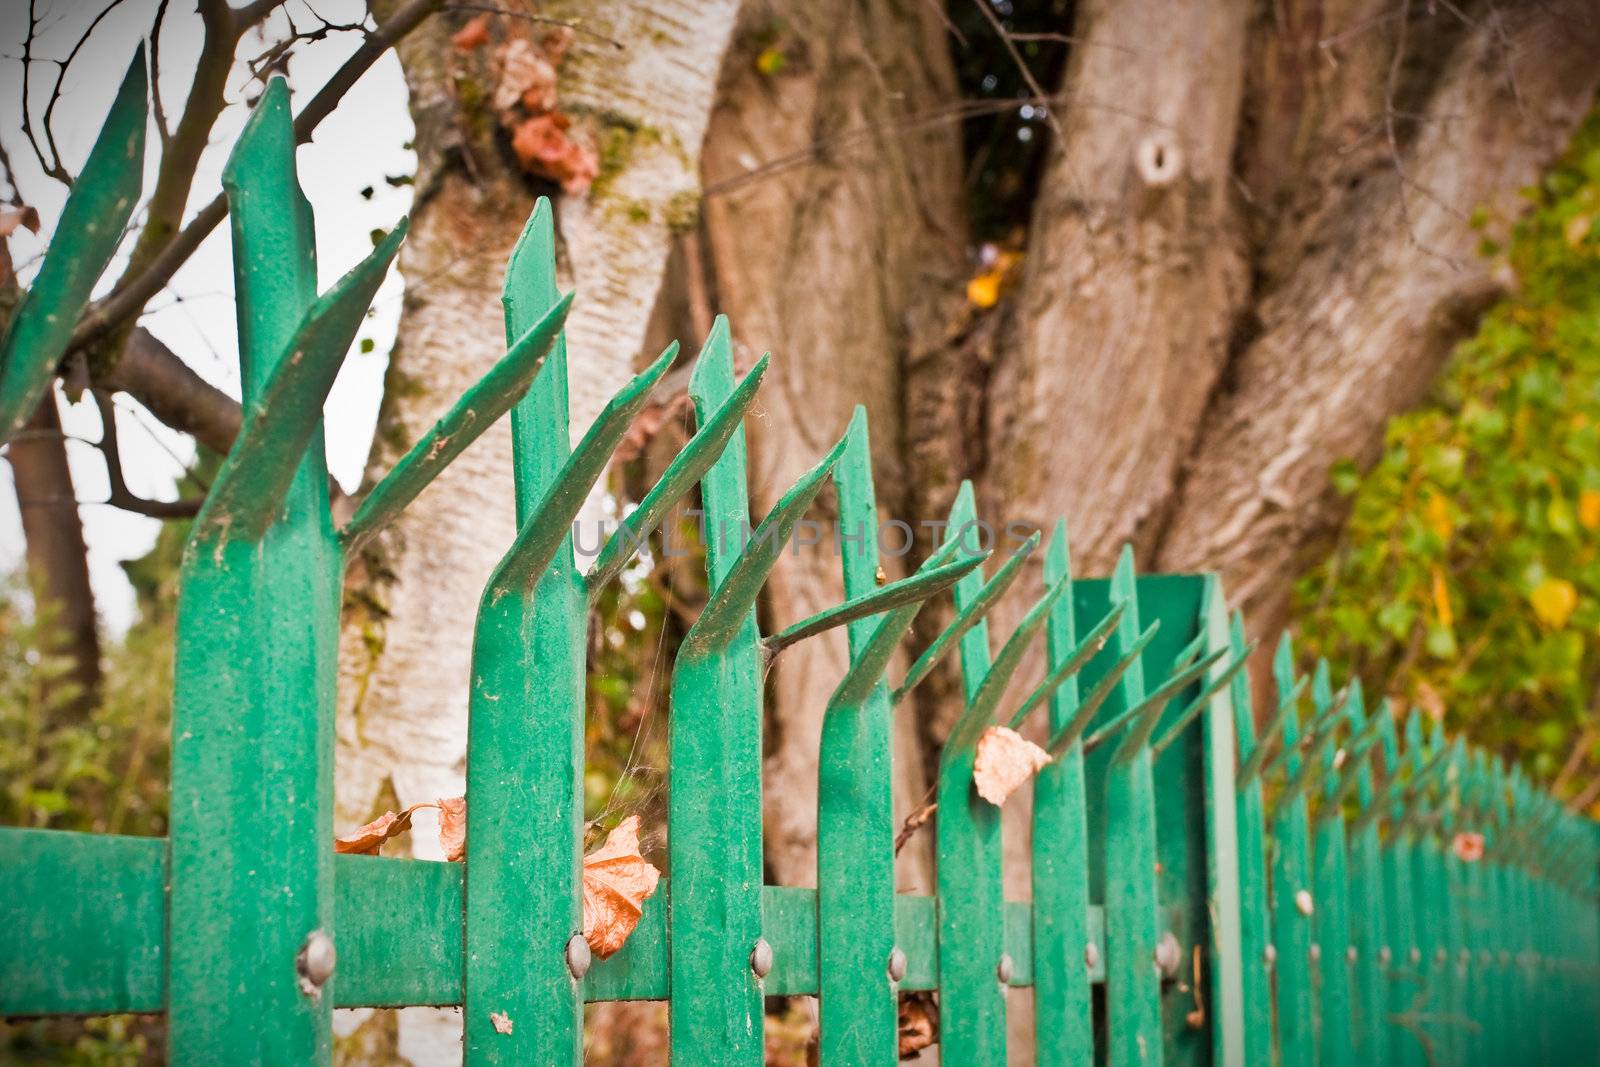 Fence spikes by trgowanlock